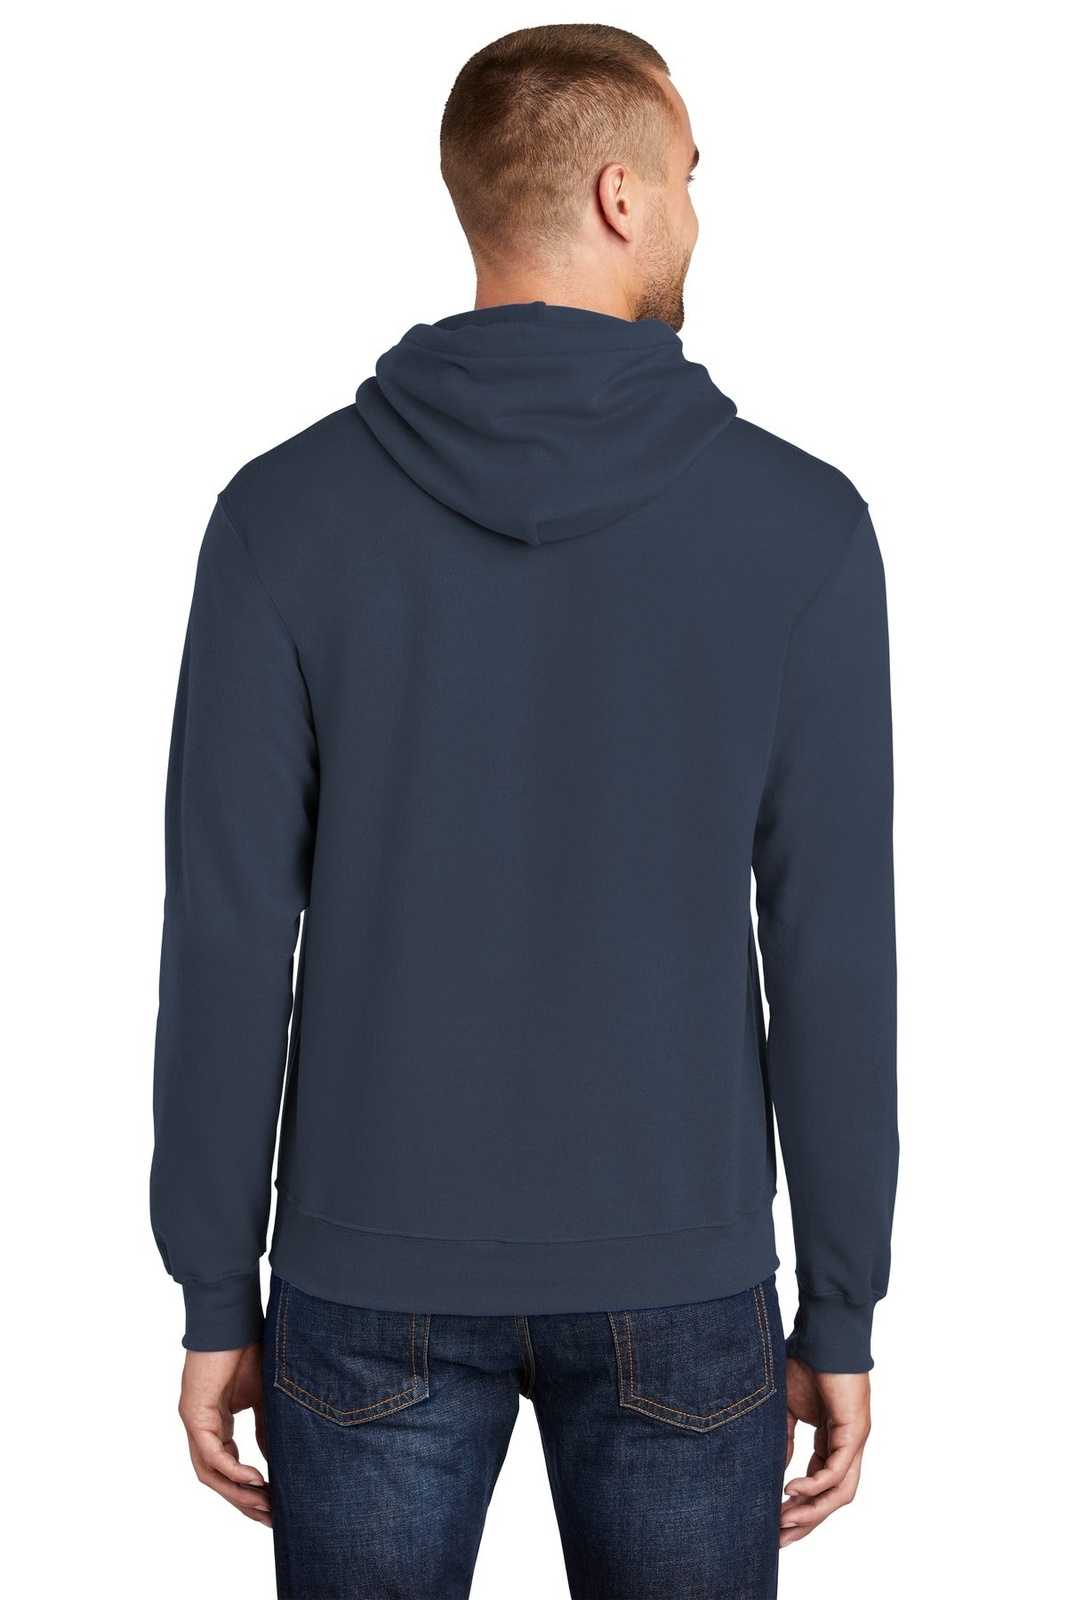 Port & Company PC78HT Tall Core Fleece Pullover Hooded Sweatshirt - Navy - HIT a Double - 1